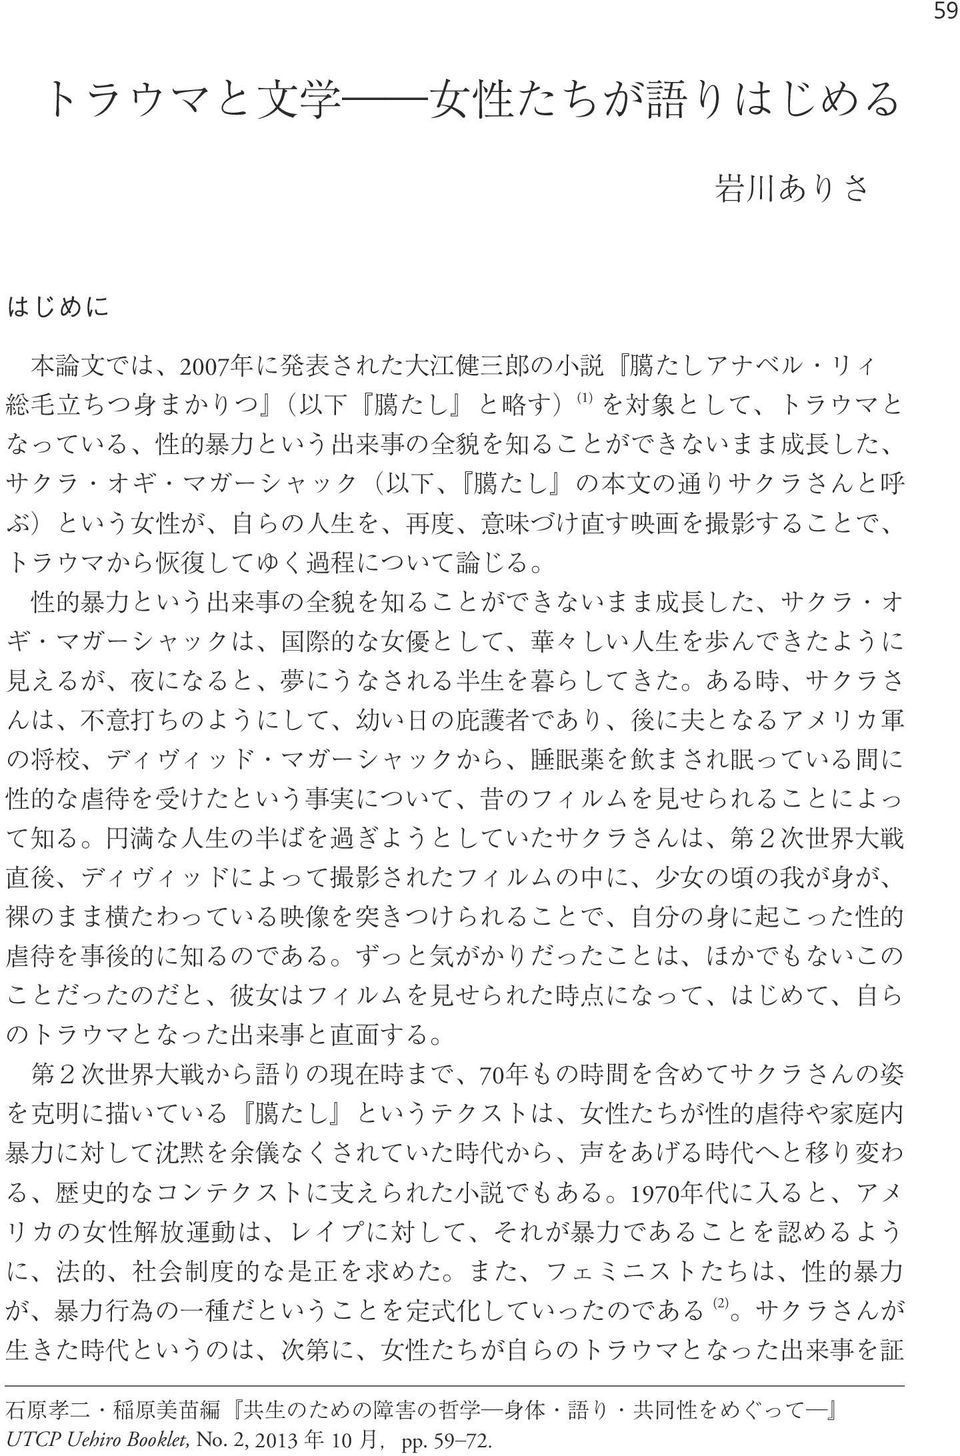 Uehiro Booklet, No.